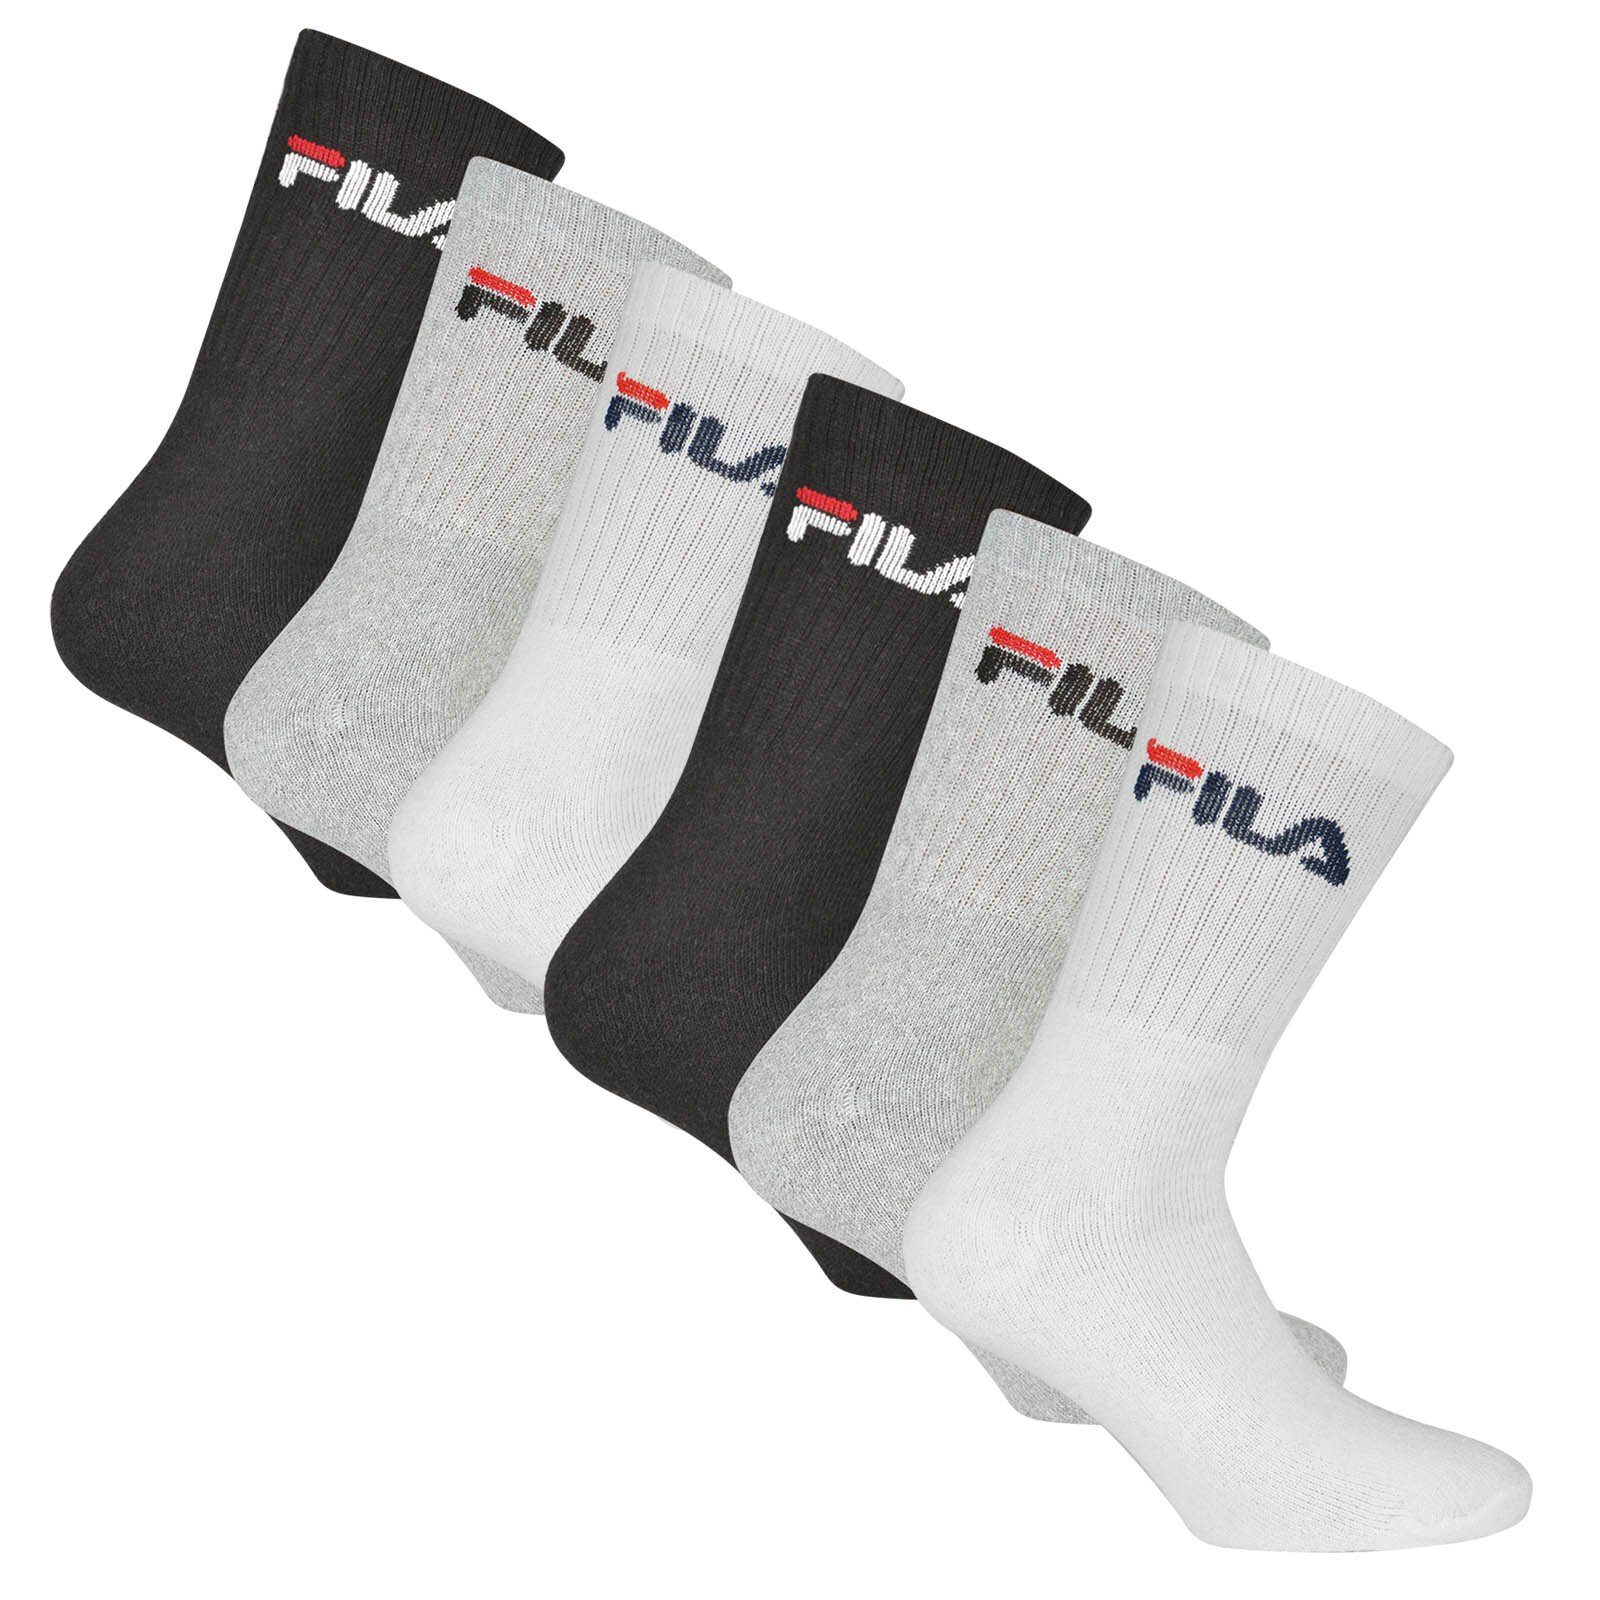 Socks, Socken, Sportsocken Frottee Fila Crew 6er Mehrfarbig Pack - Unisex